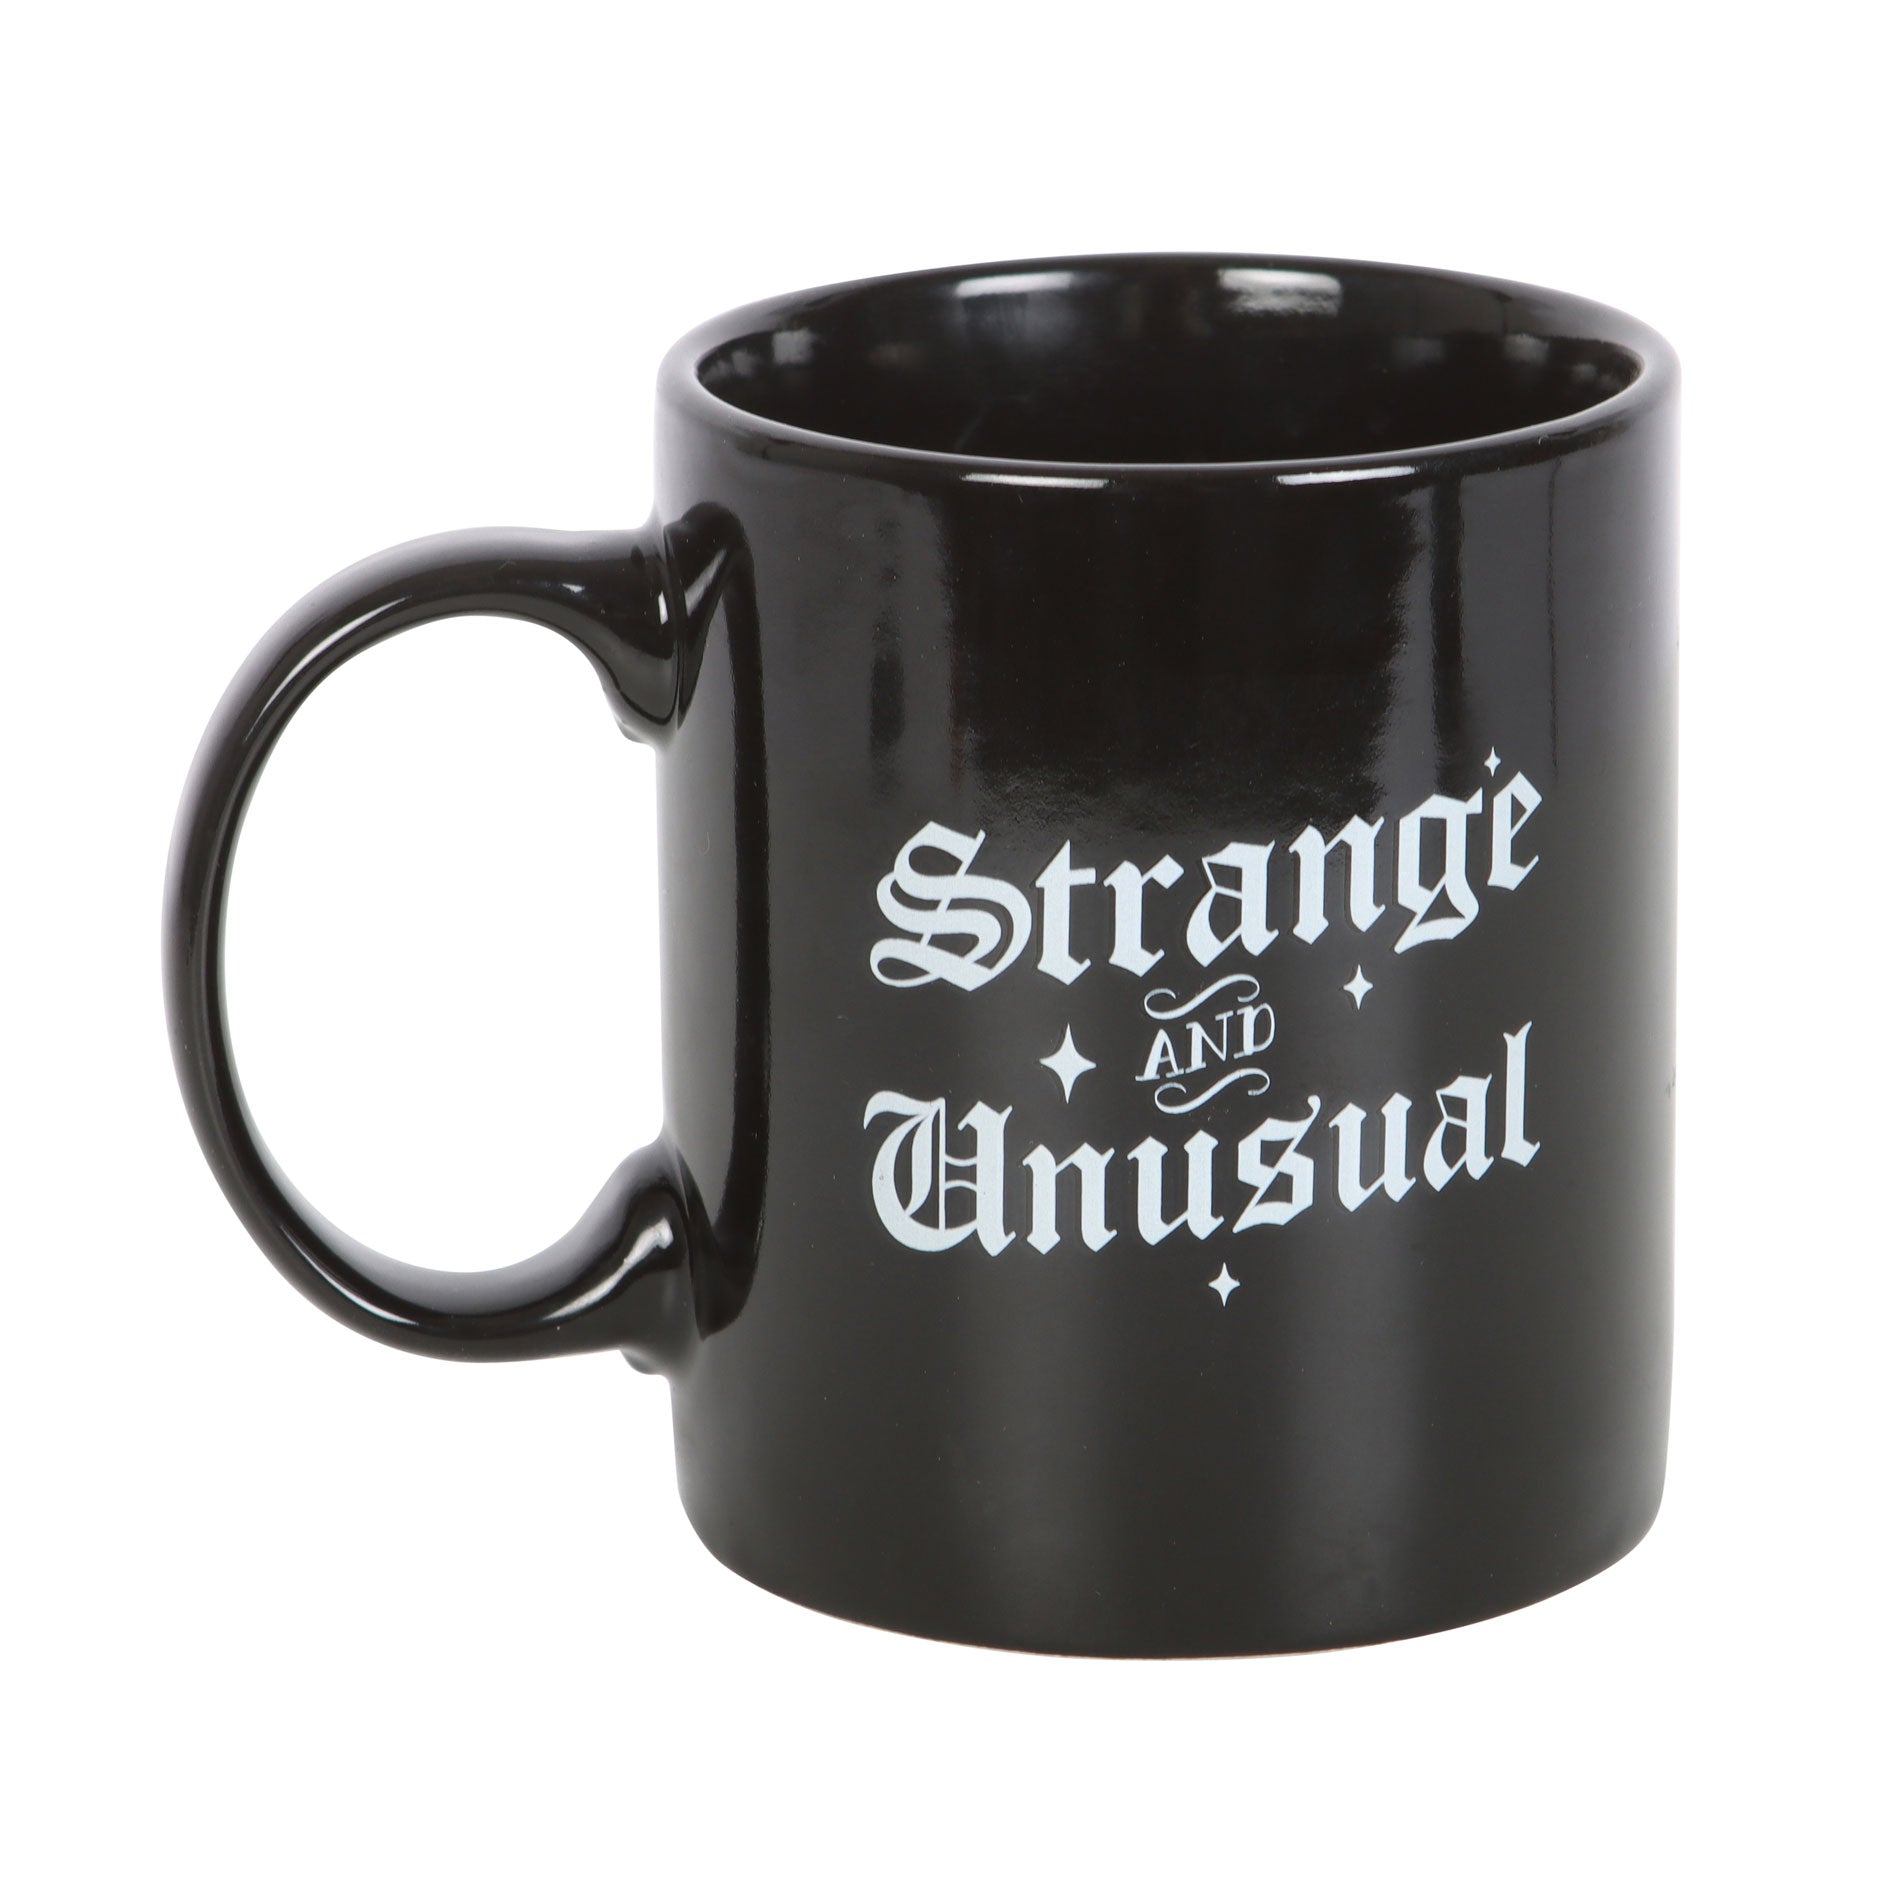 View Strange and Unusual Mug information